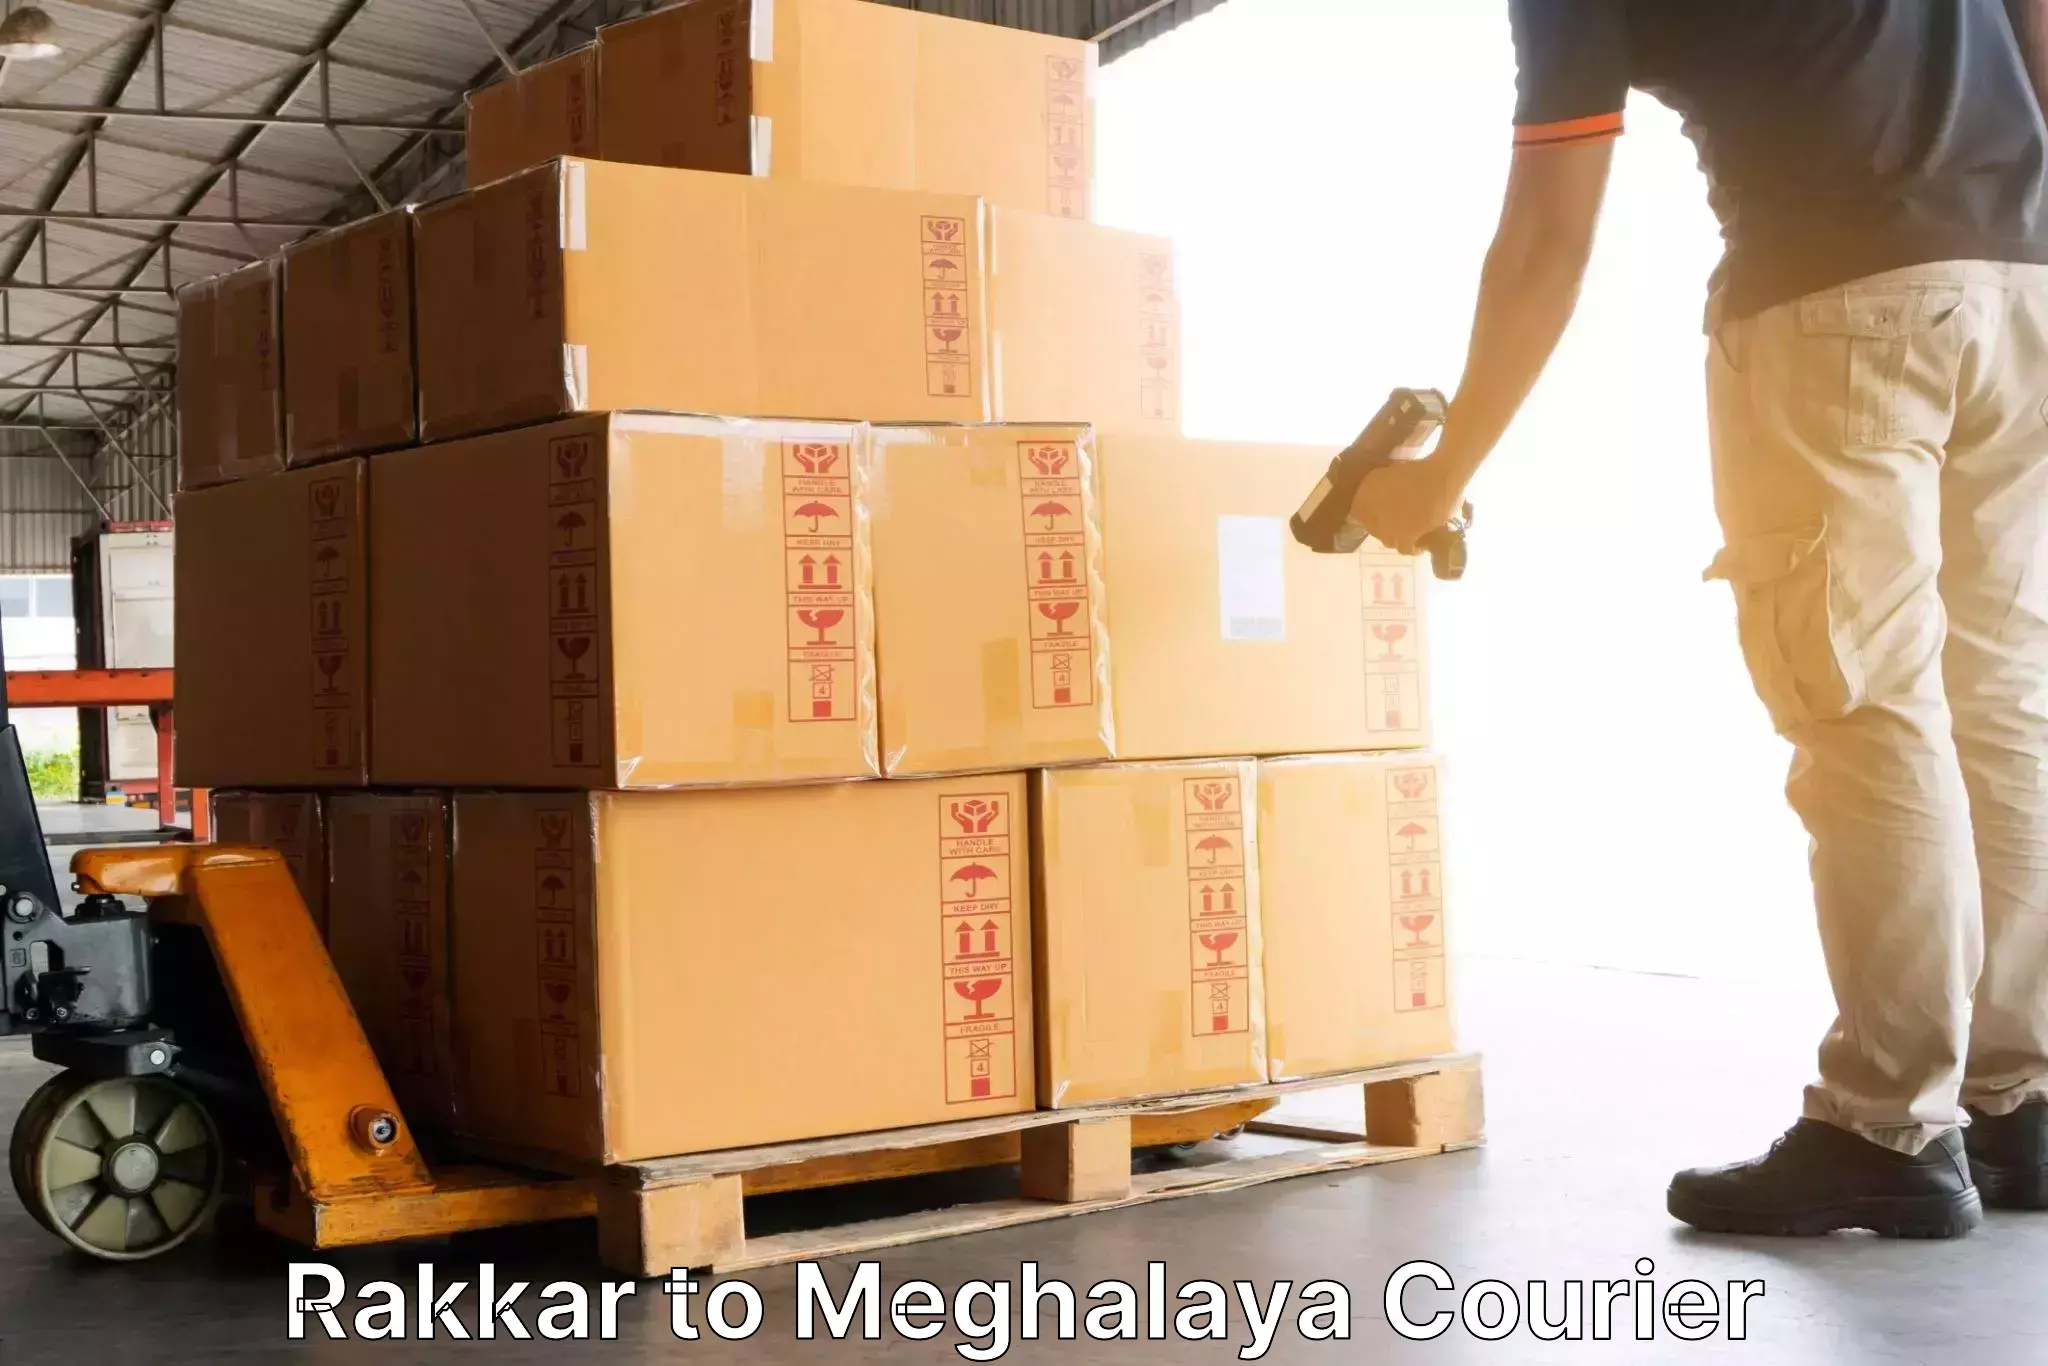 Courier service comparison in Rakkar to Meghalaya